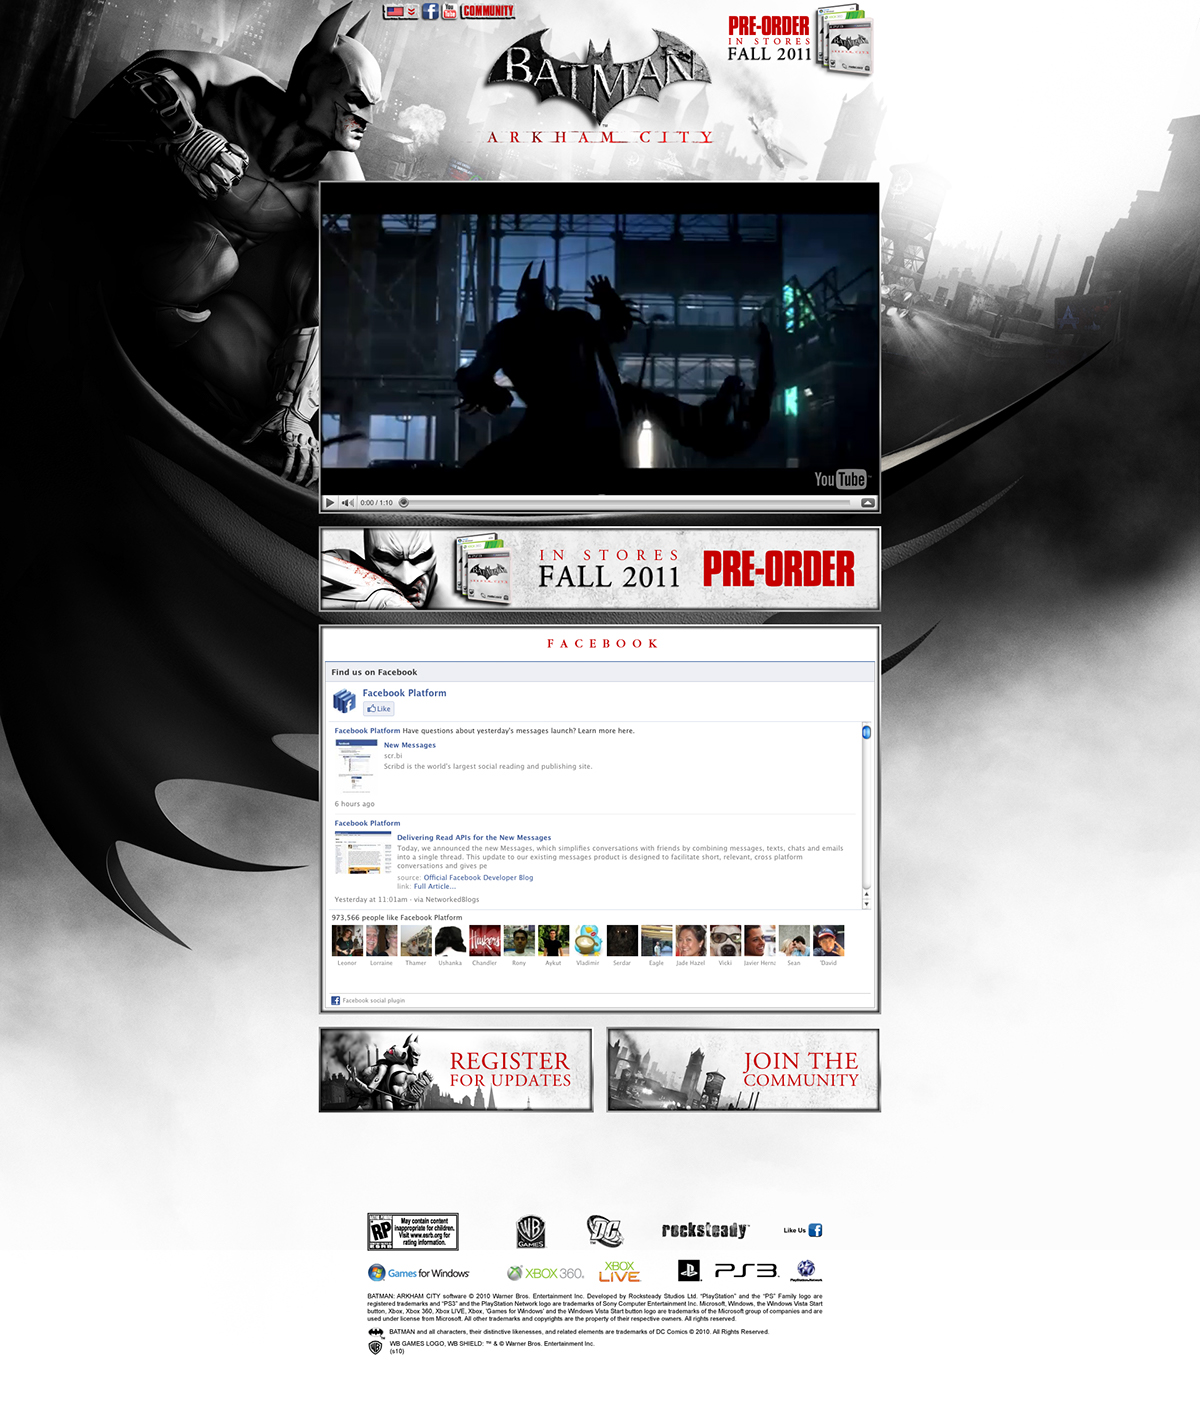 Website warner brothers batman rich media banner campaign Online Advertising video game dc